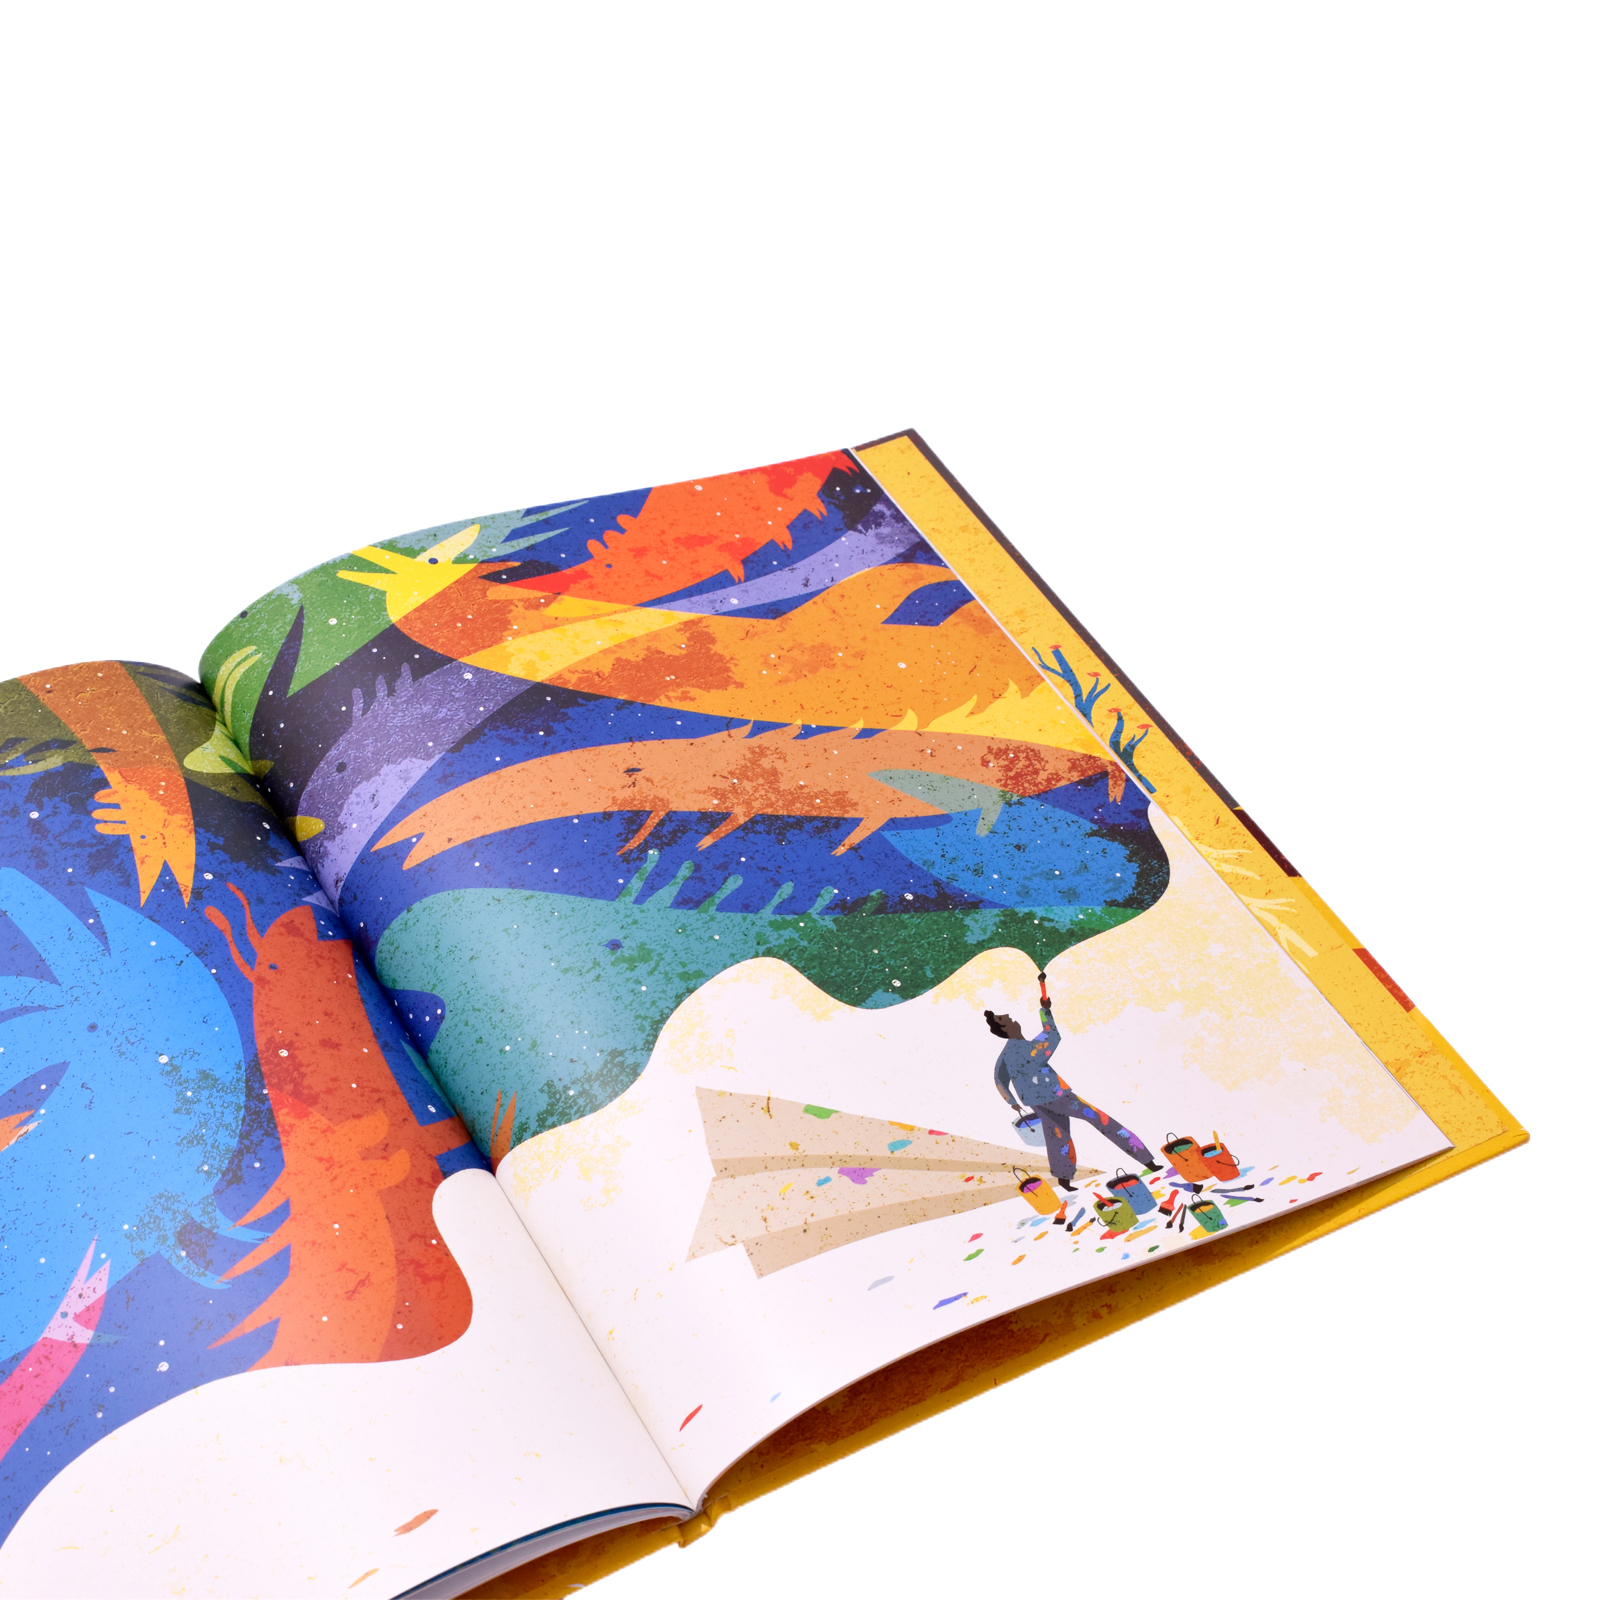 ''Ten Infinite Songs'' features paint-like graphics / Panamericana